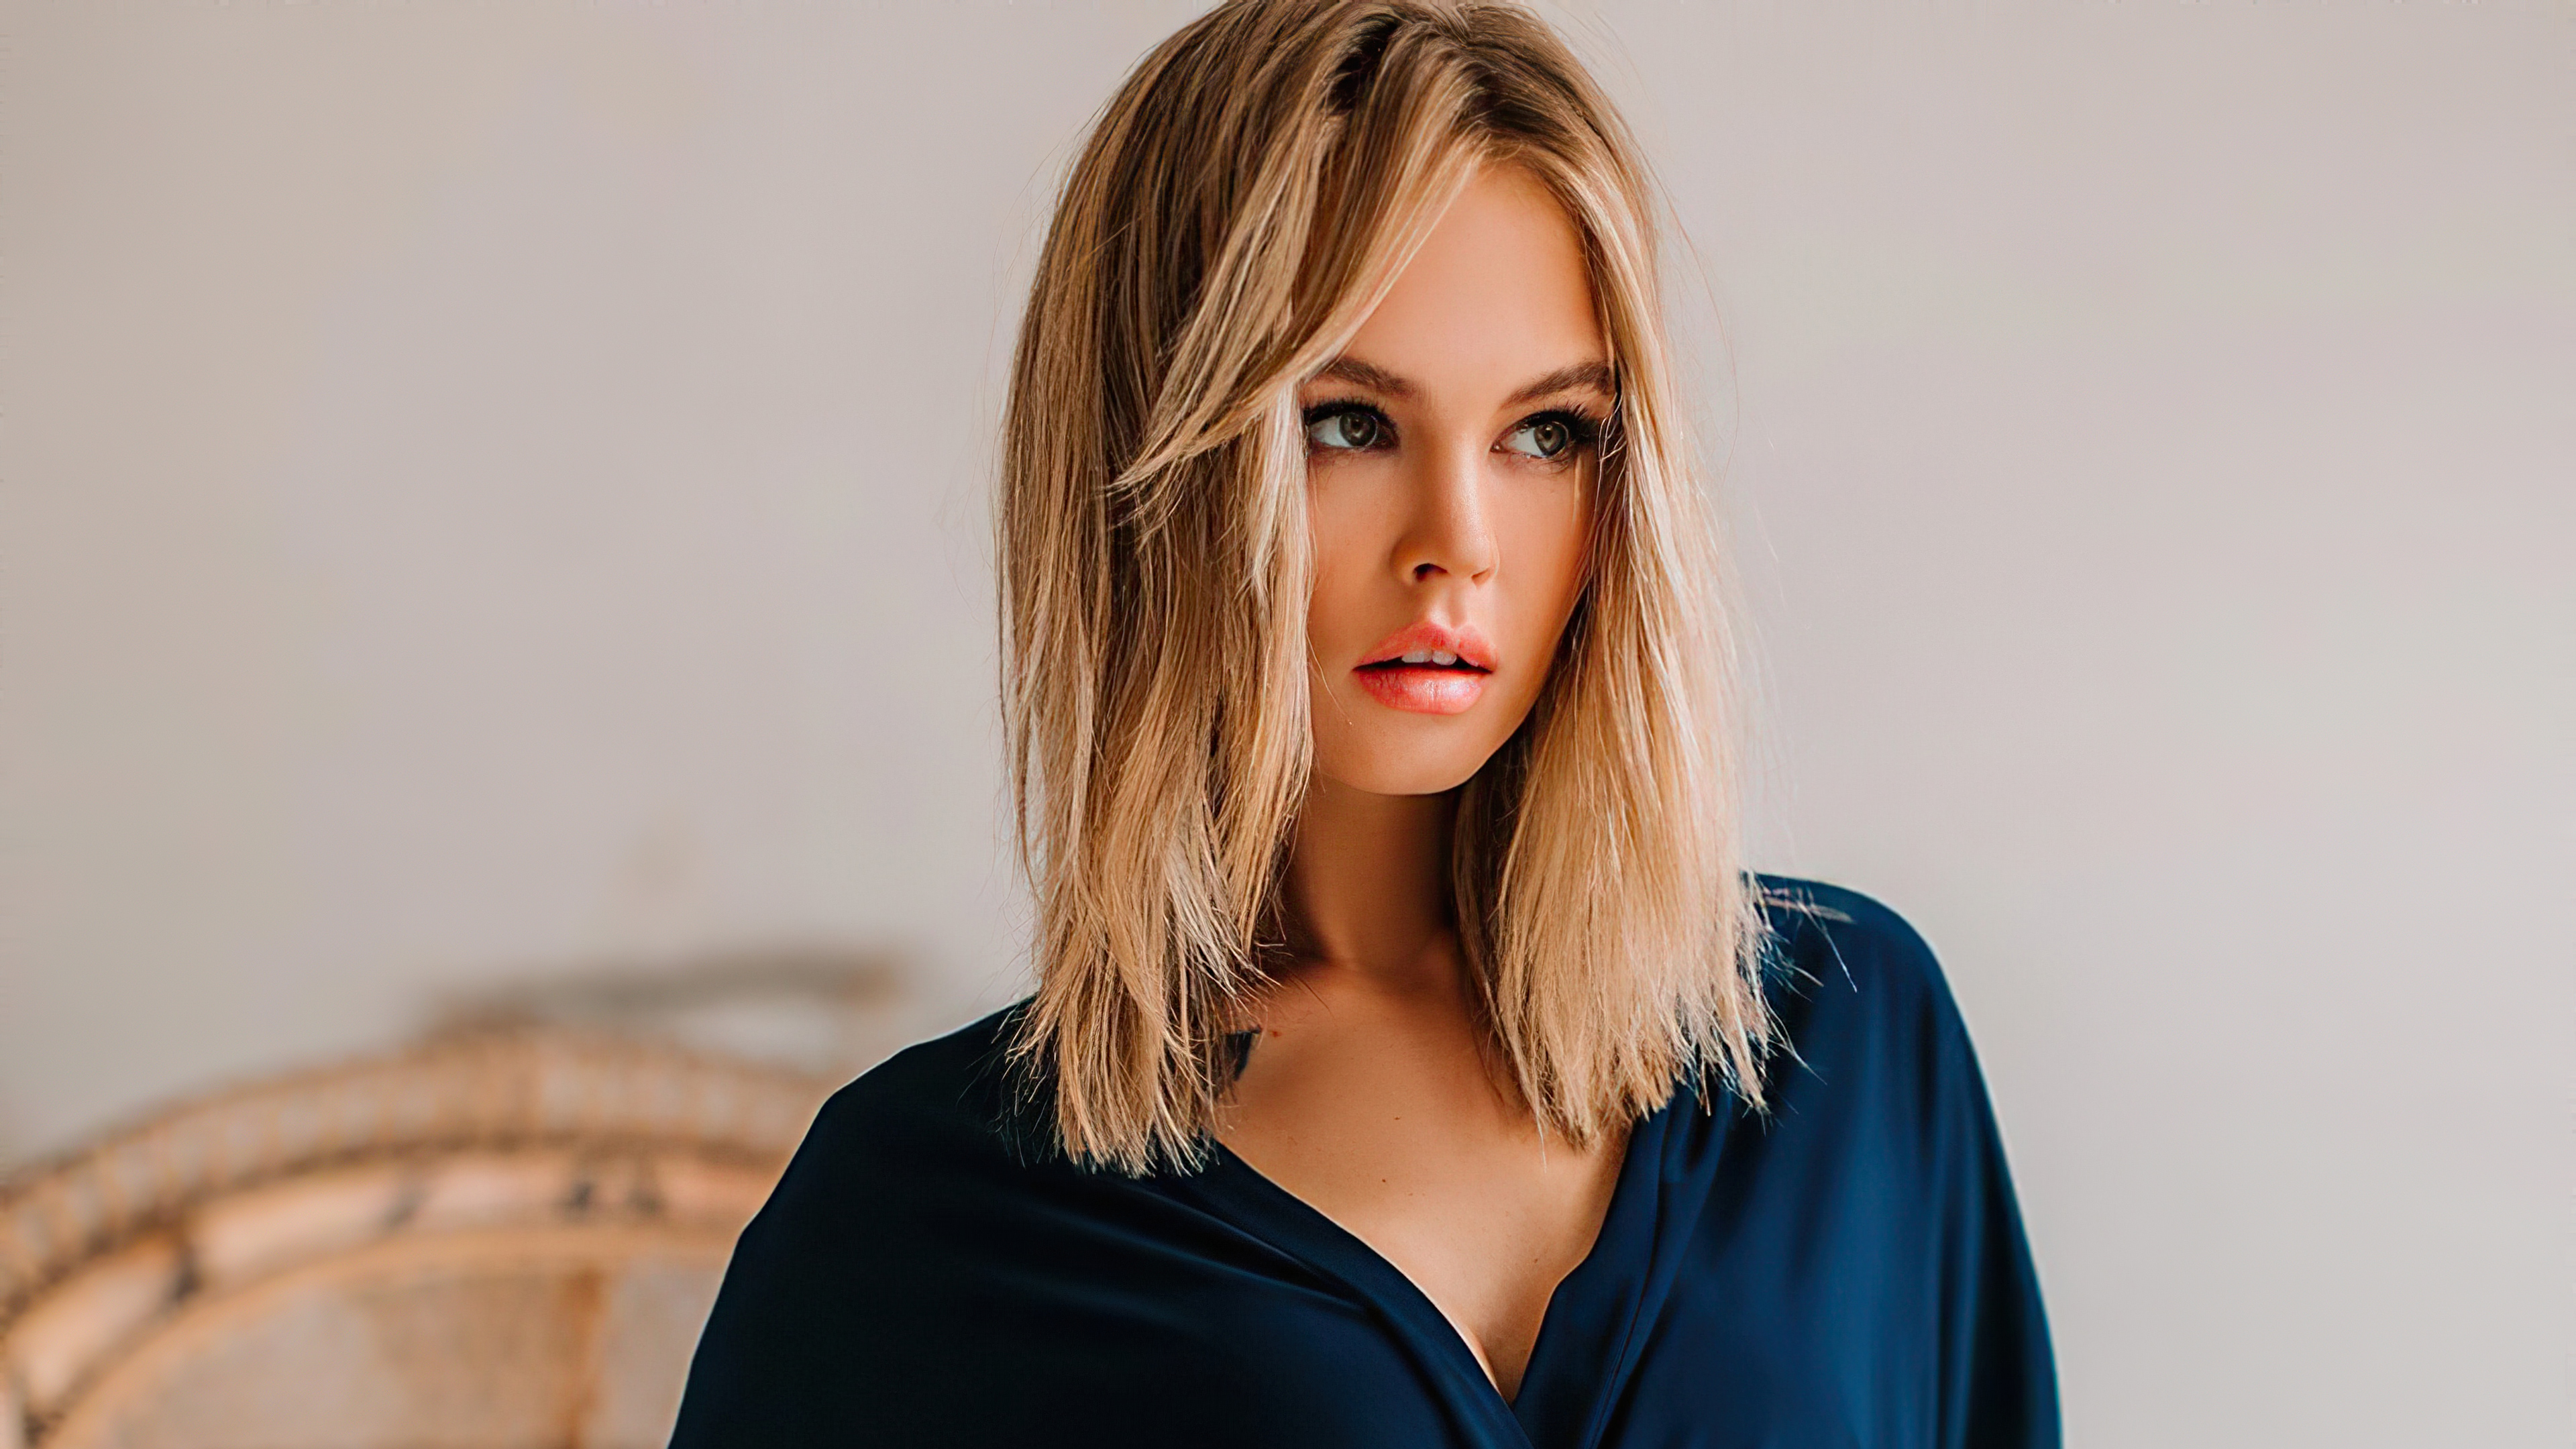 Model Anastasiya Scheglova 2020 Wallpapers